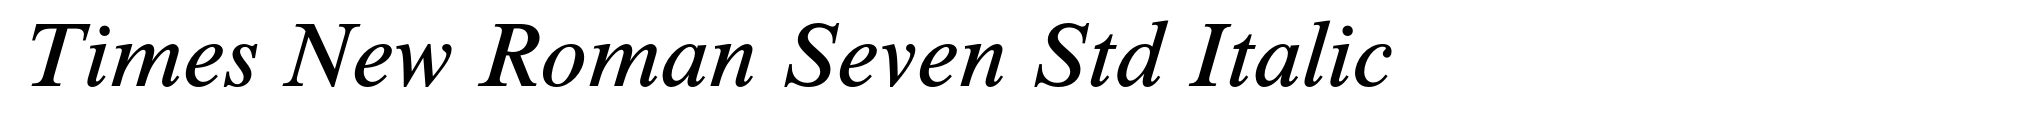 Times New Roman Seven Std Italic image